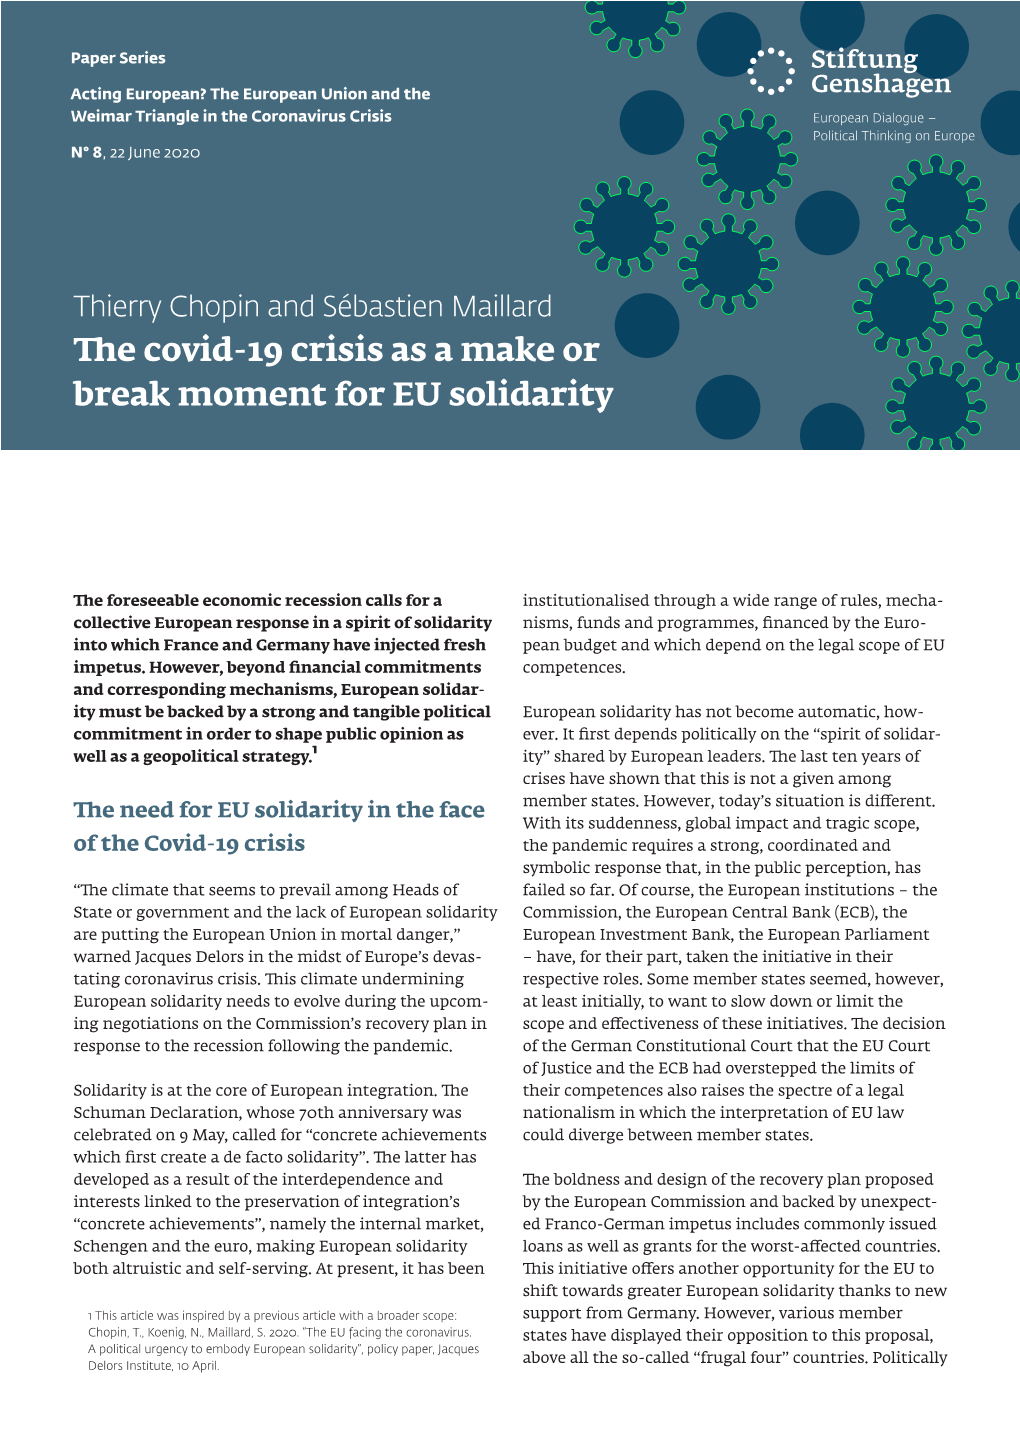 The Covid-19 Crisis As a Make Or Break Moment for EU Solidarity